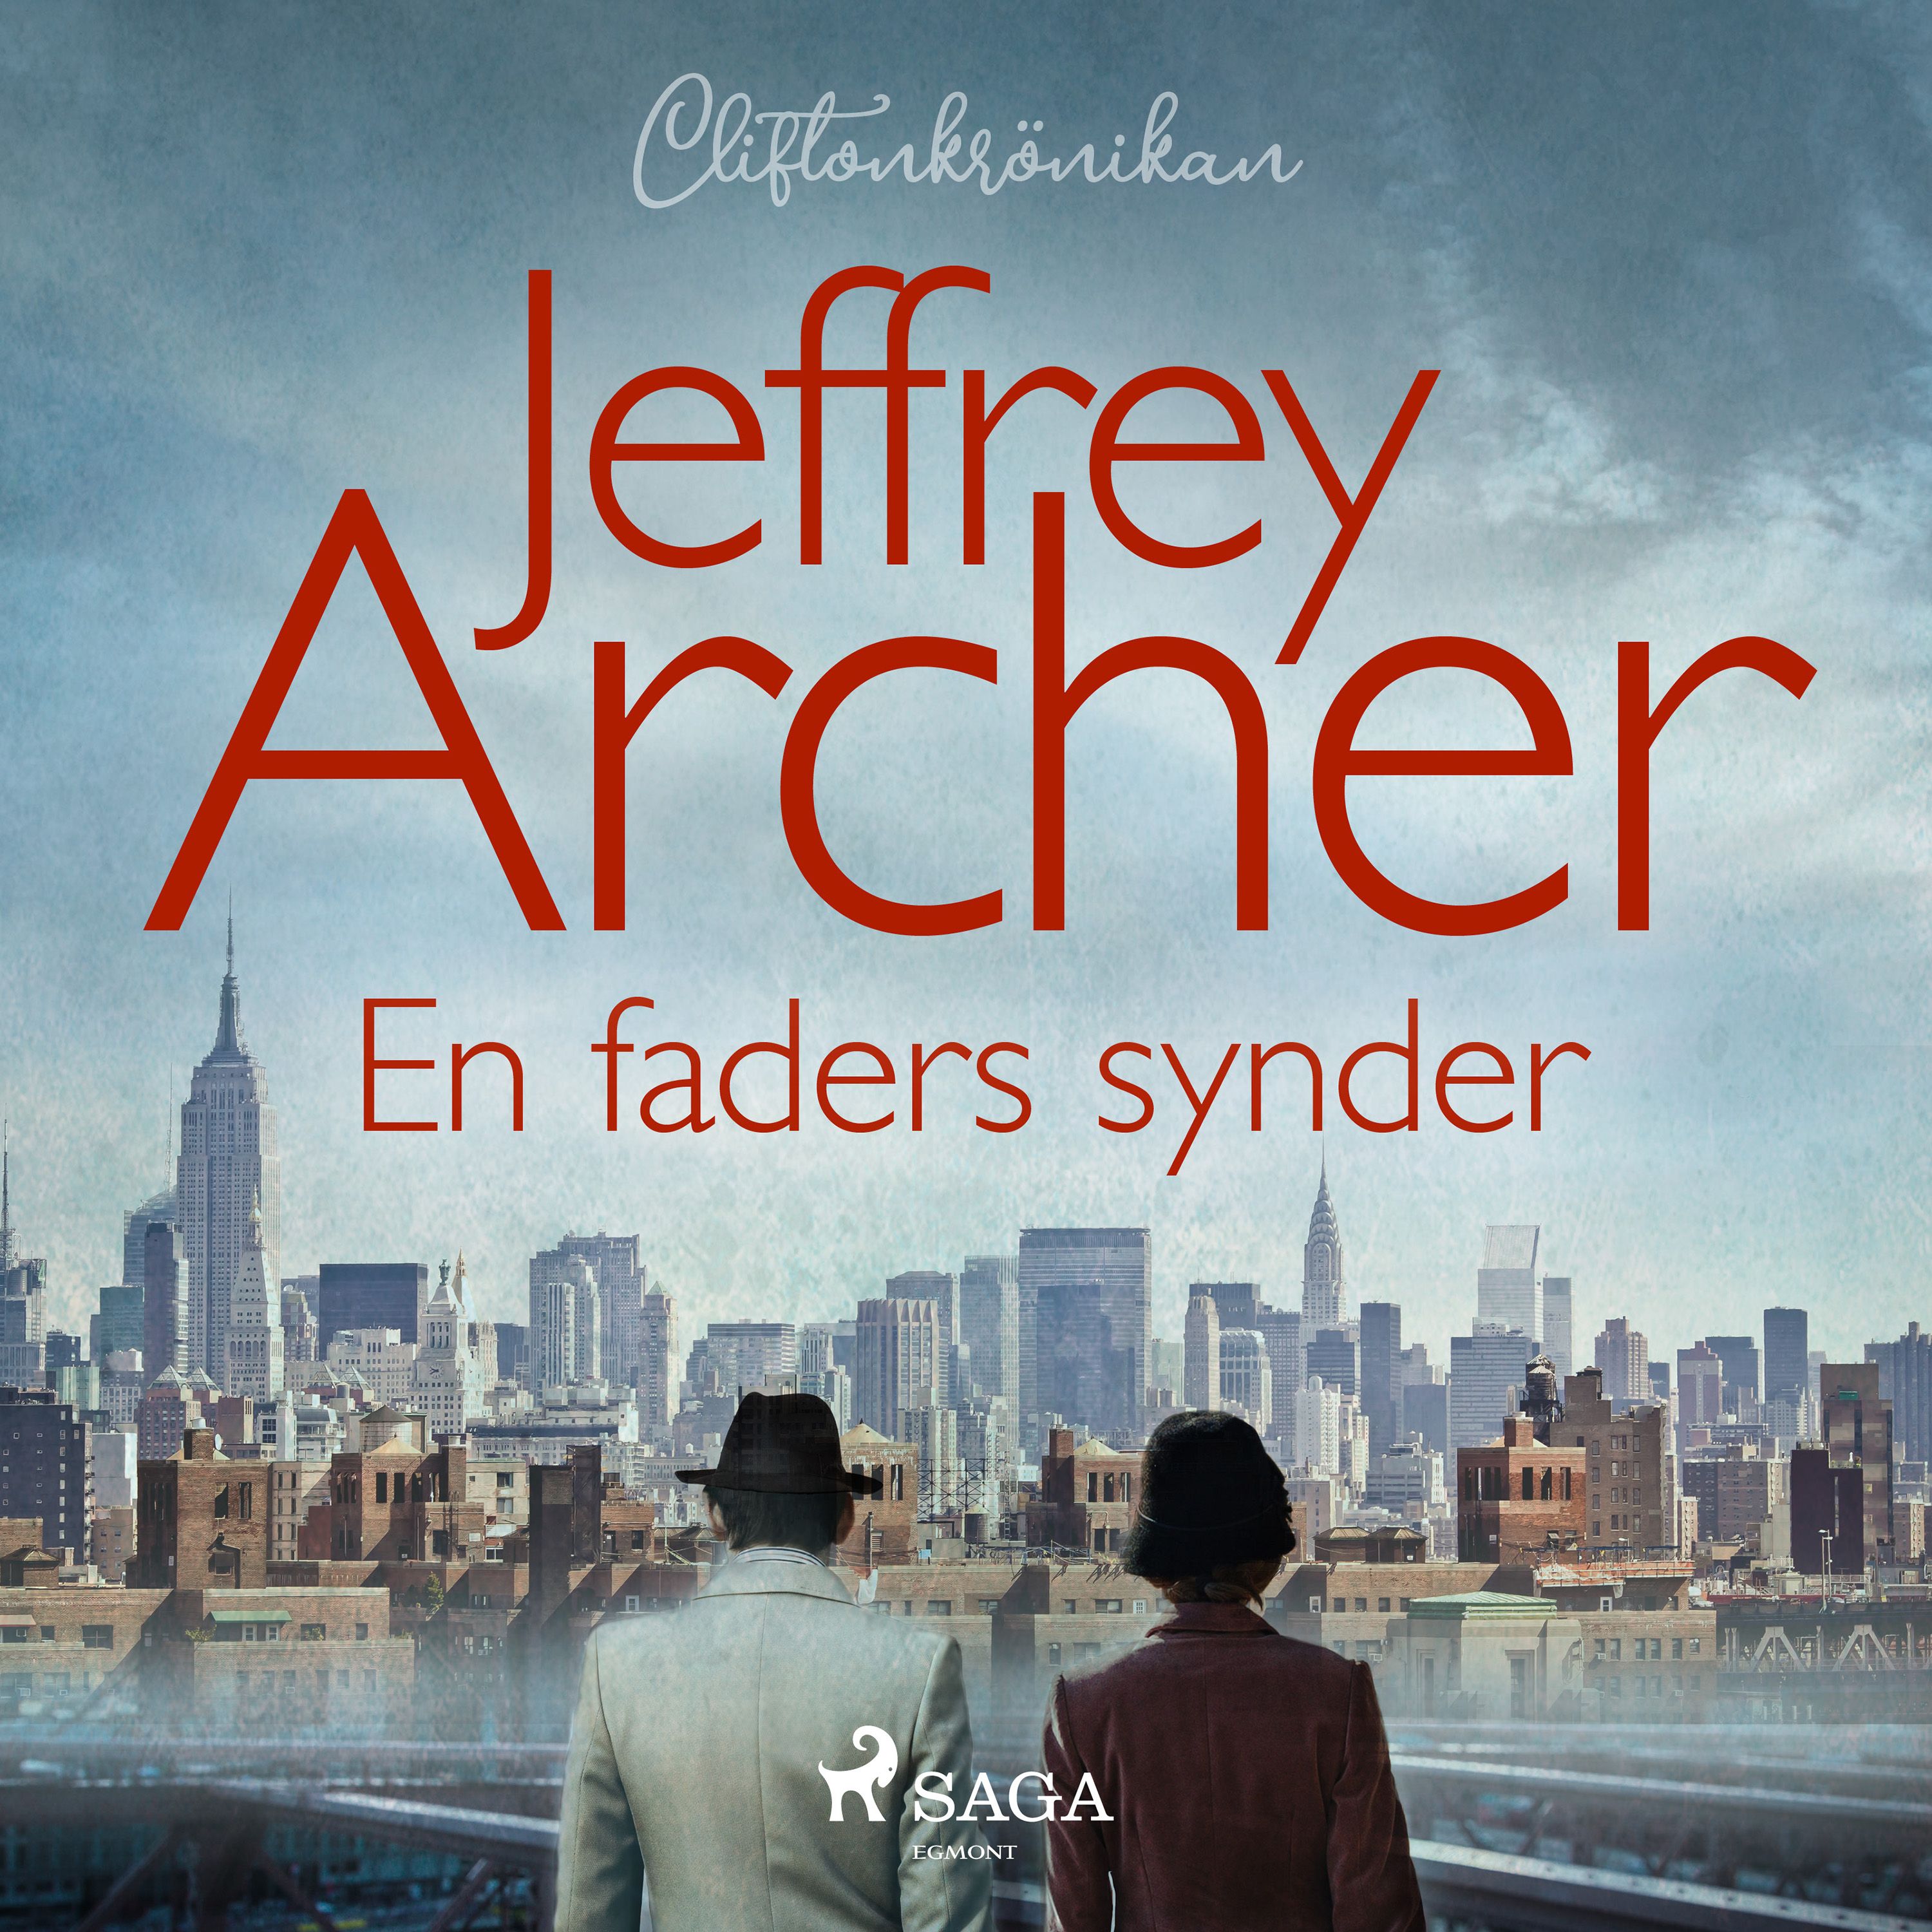 En faders synder, audiobook by Jeffrey Archer